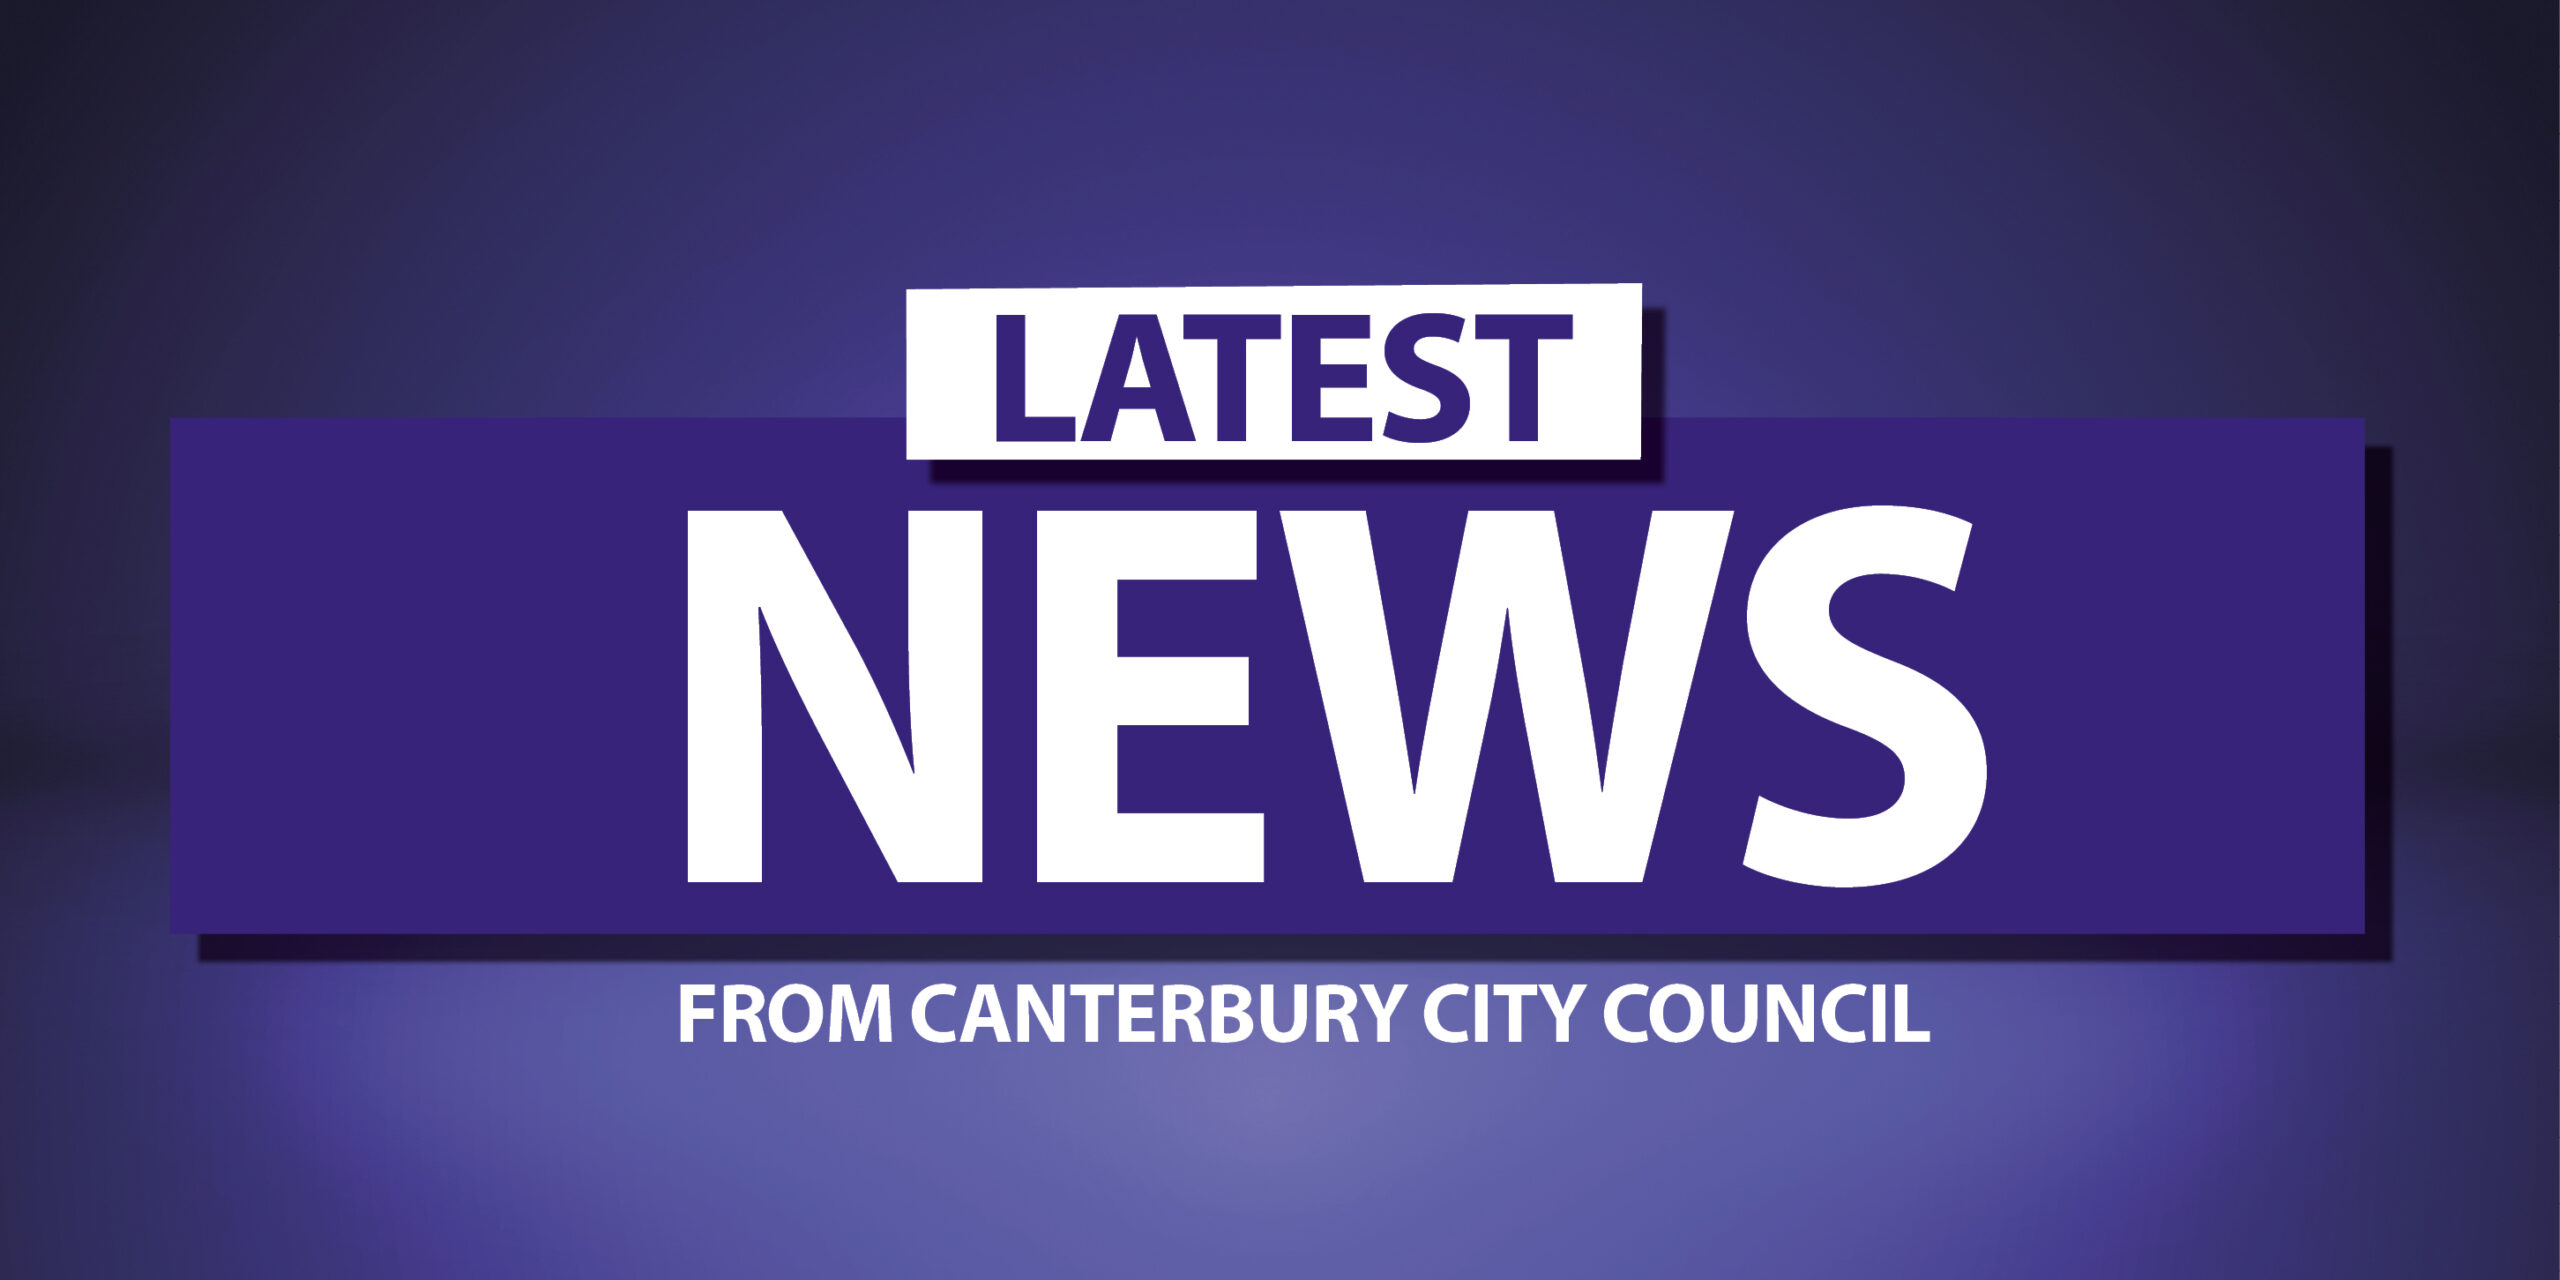 Council secures closure order on Herne property